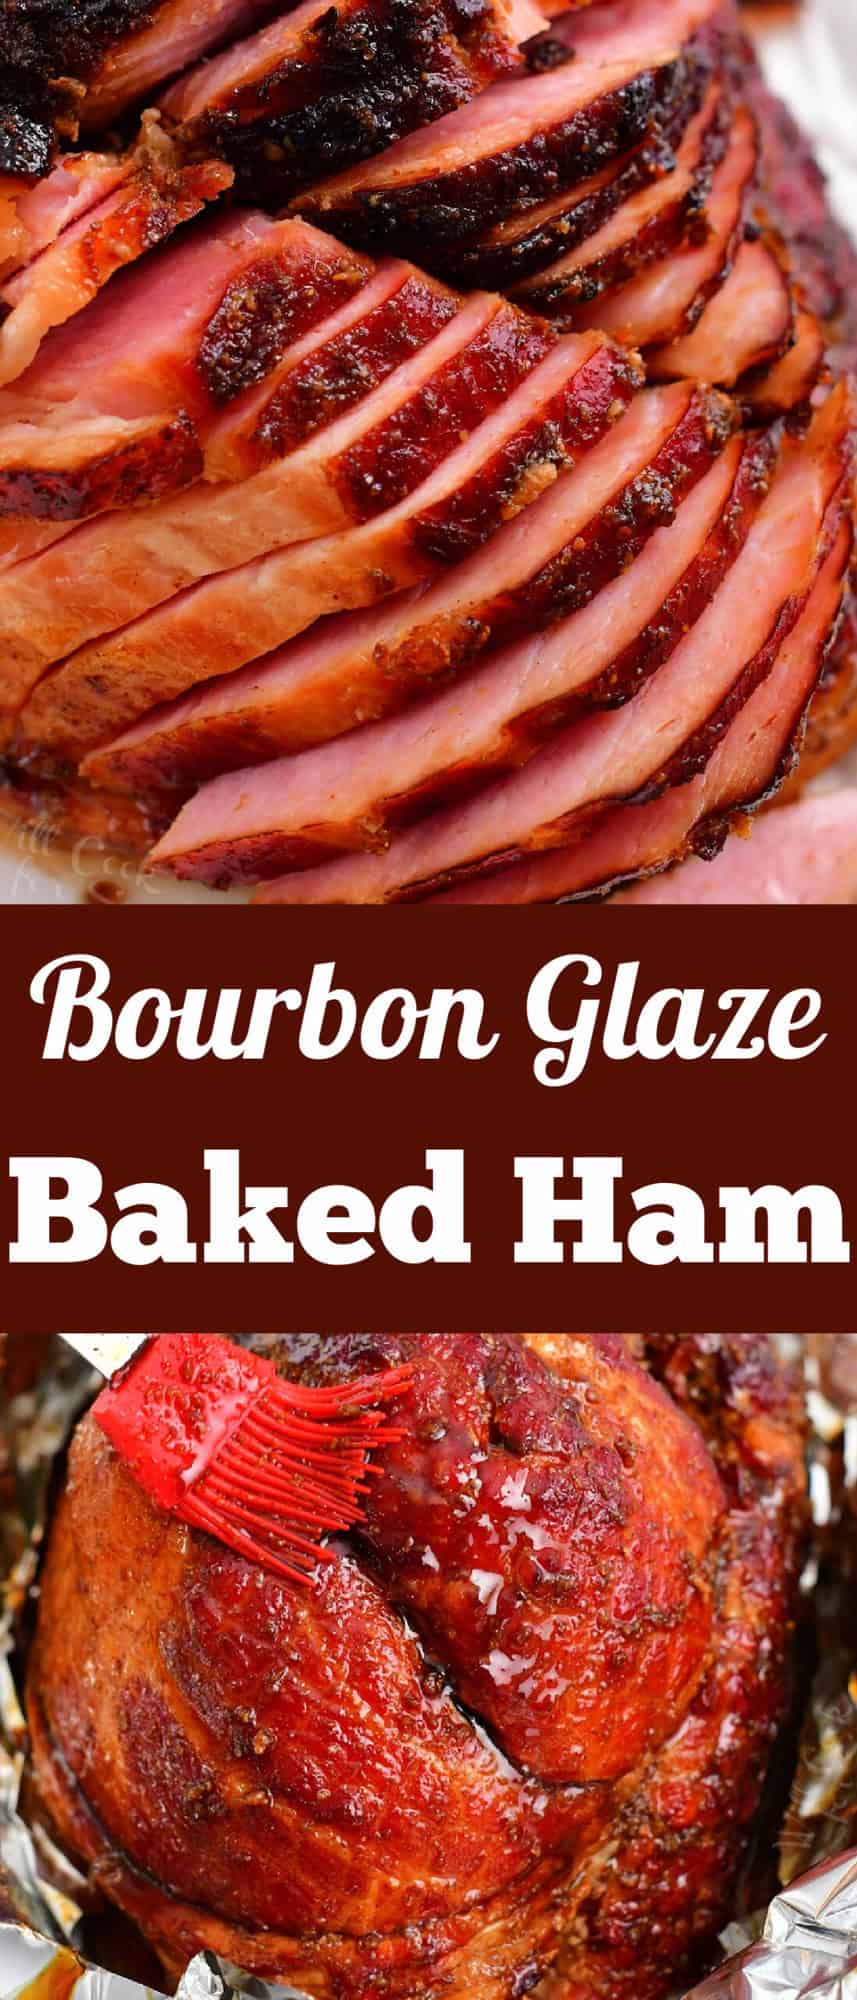 titled Pinterest image (and shown): Bourbon Glaze Baked Ham